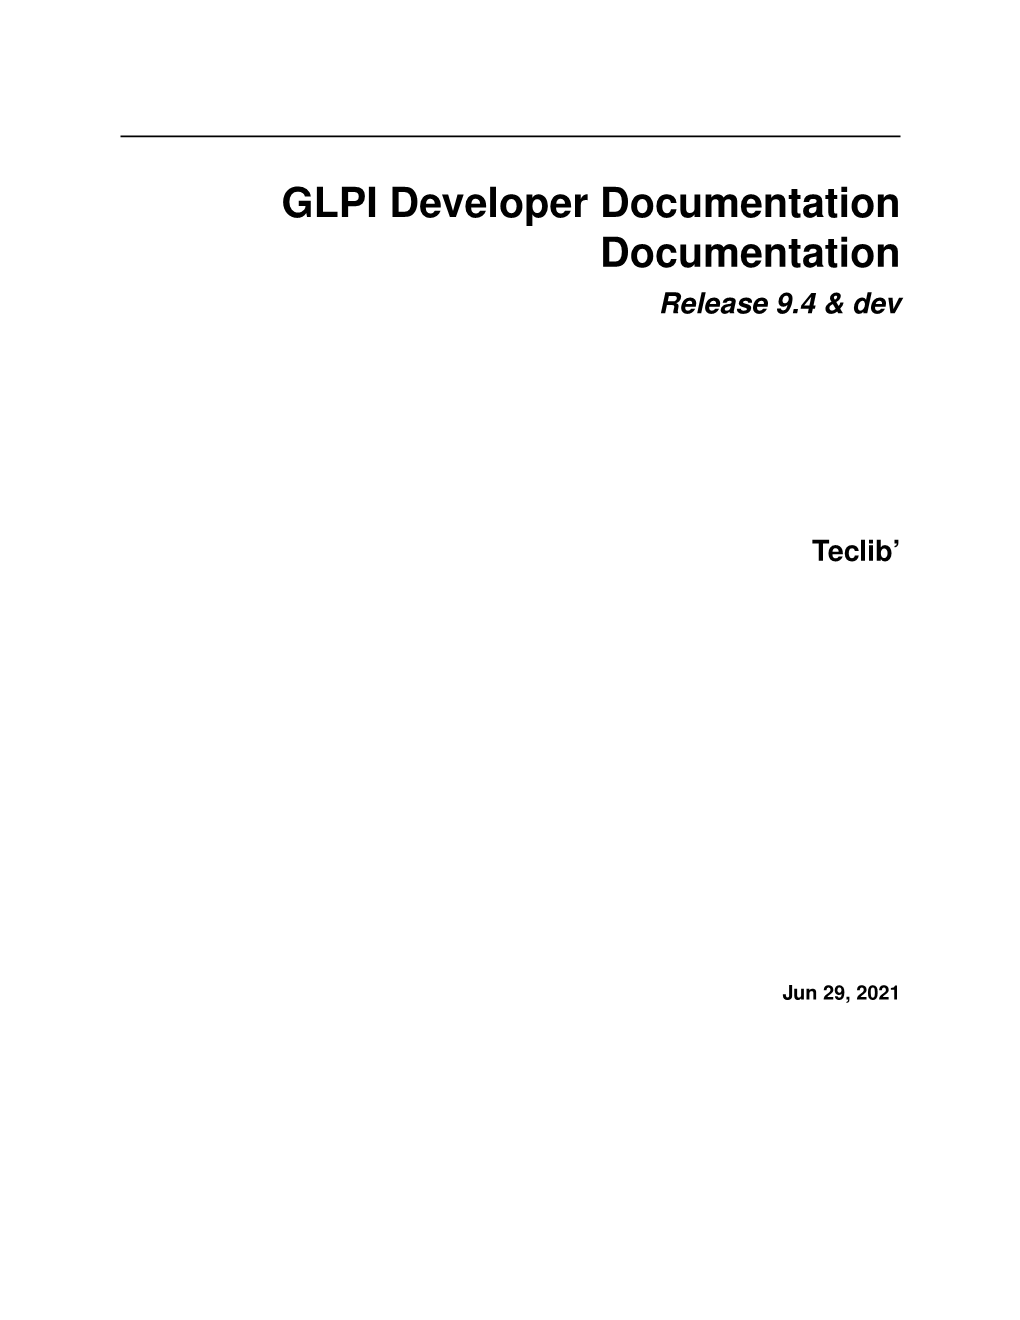 GLPI Developer Documentation Documentation Release 9.4 & Dev